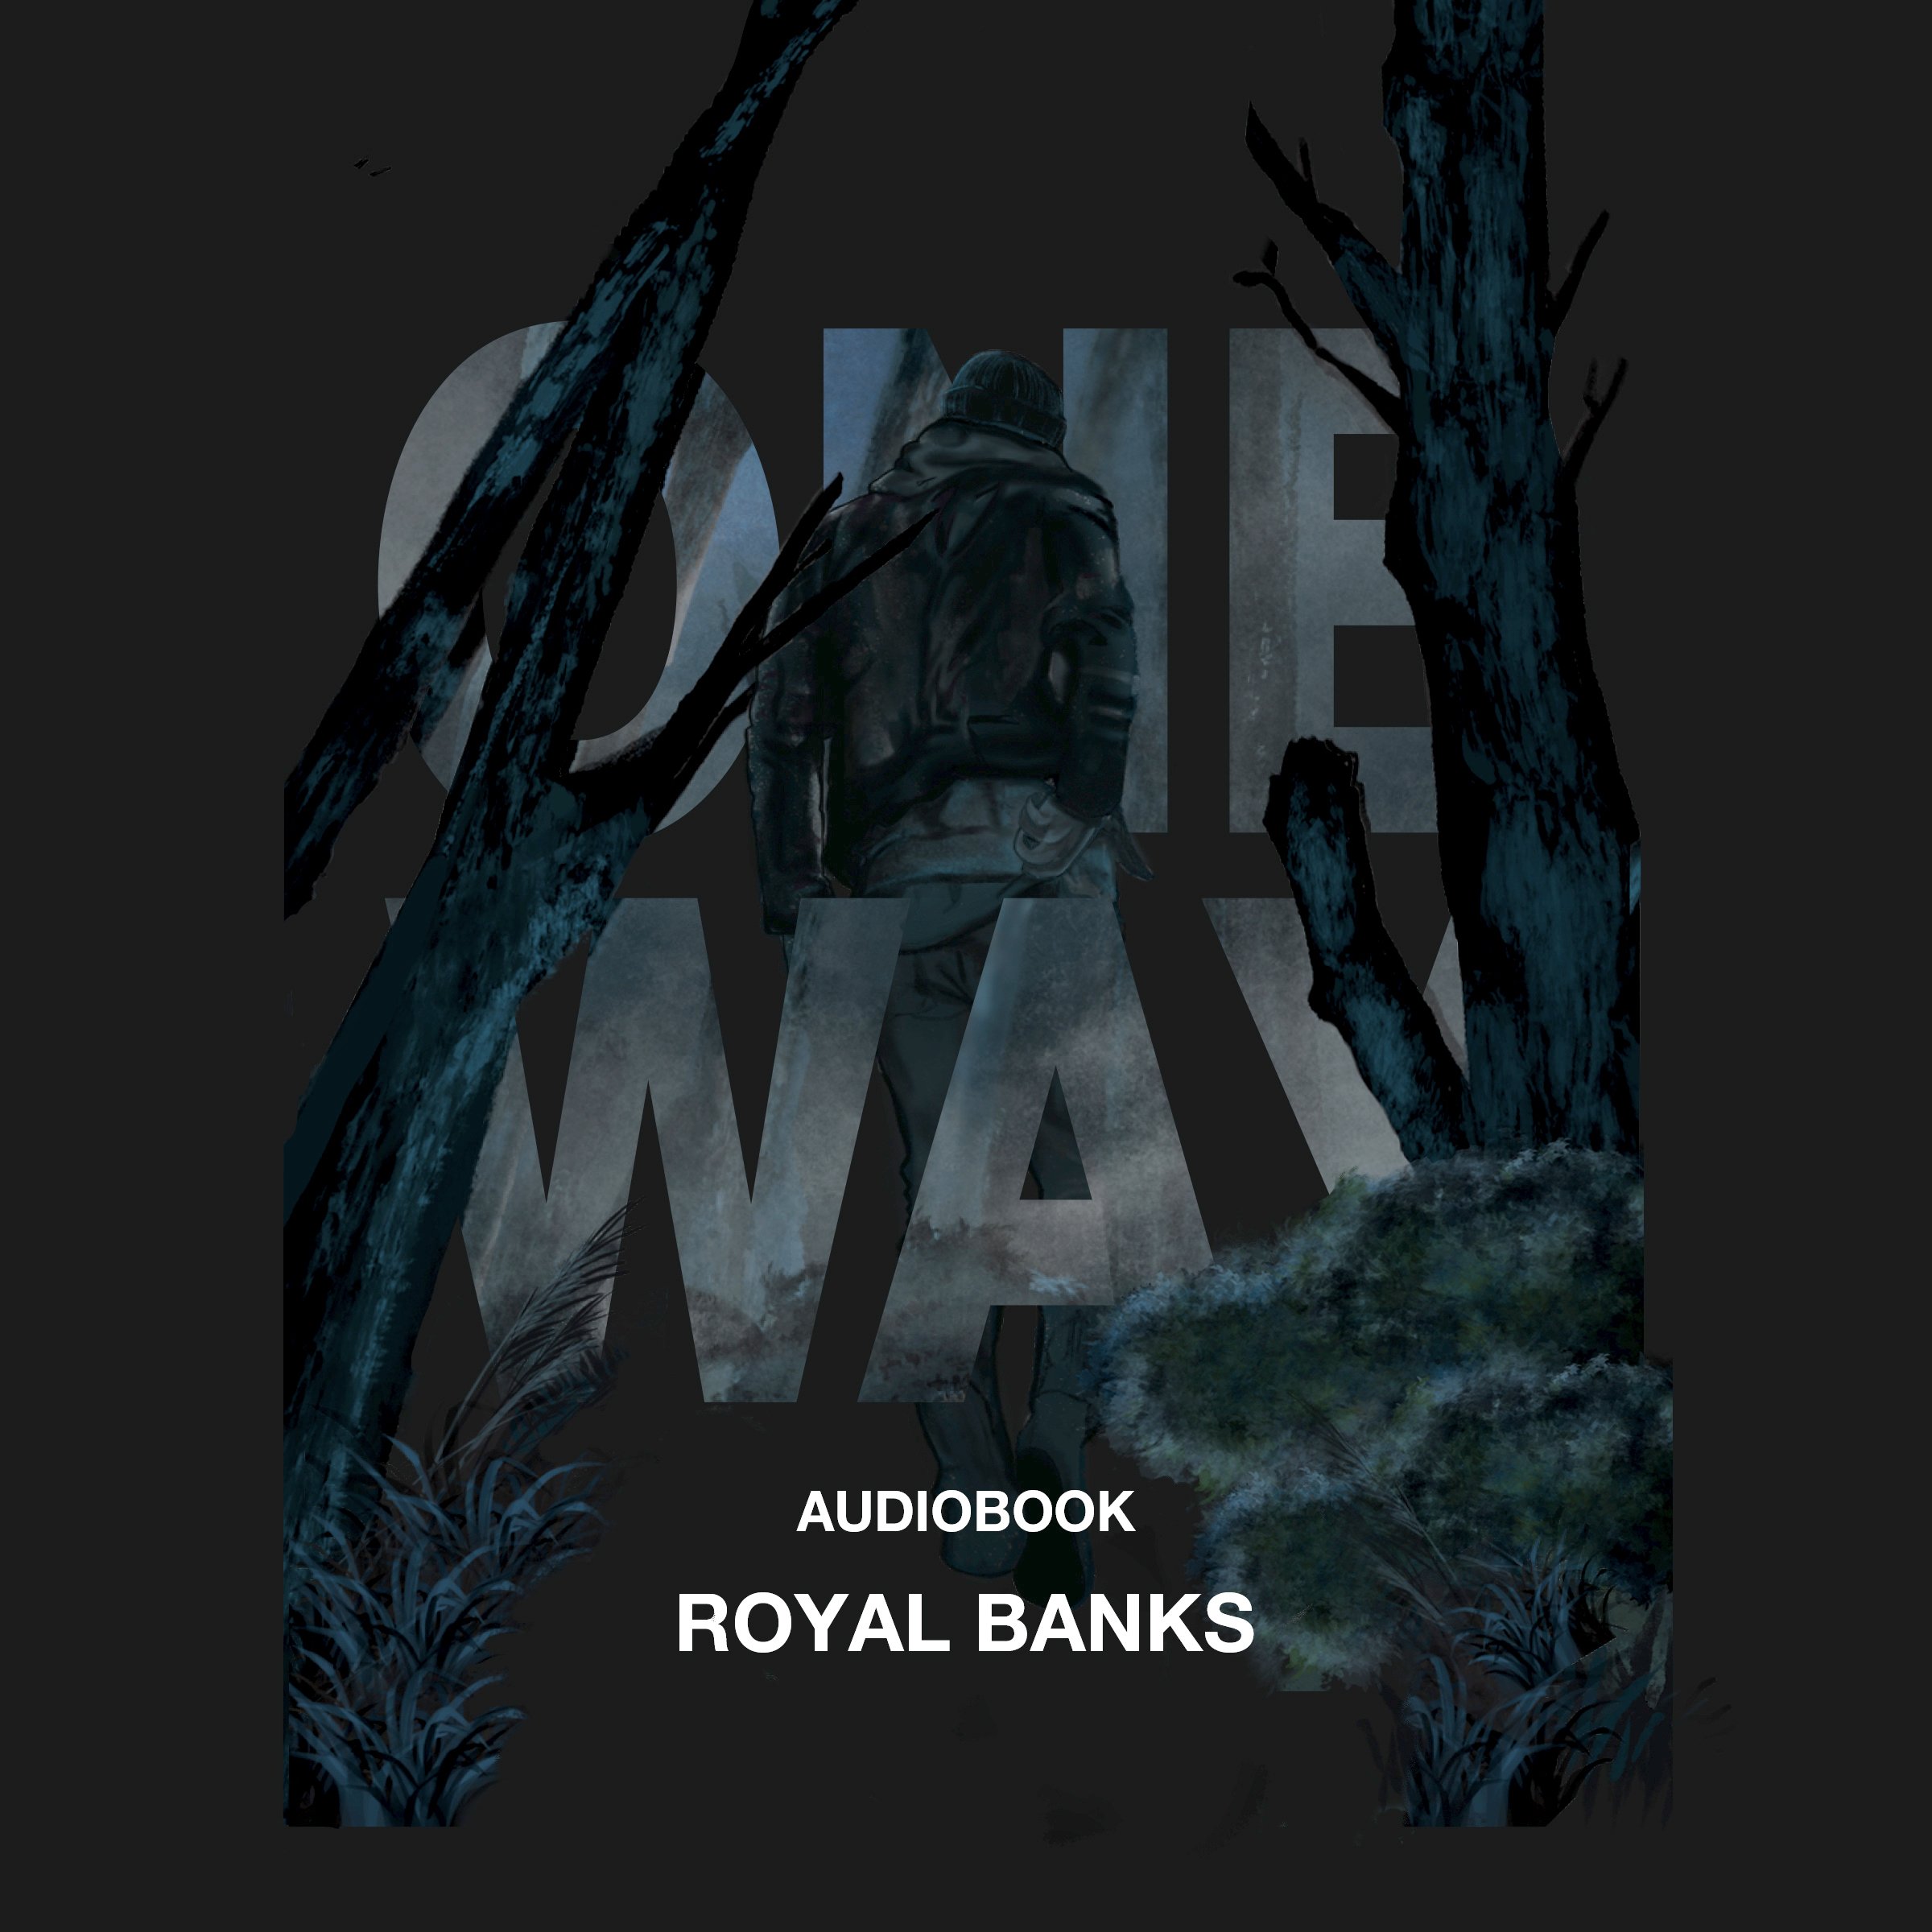 Audiobook_Royal Banks_One Way.jpg